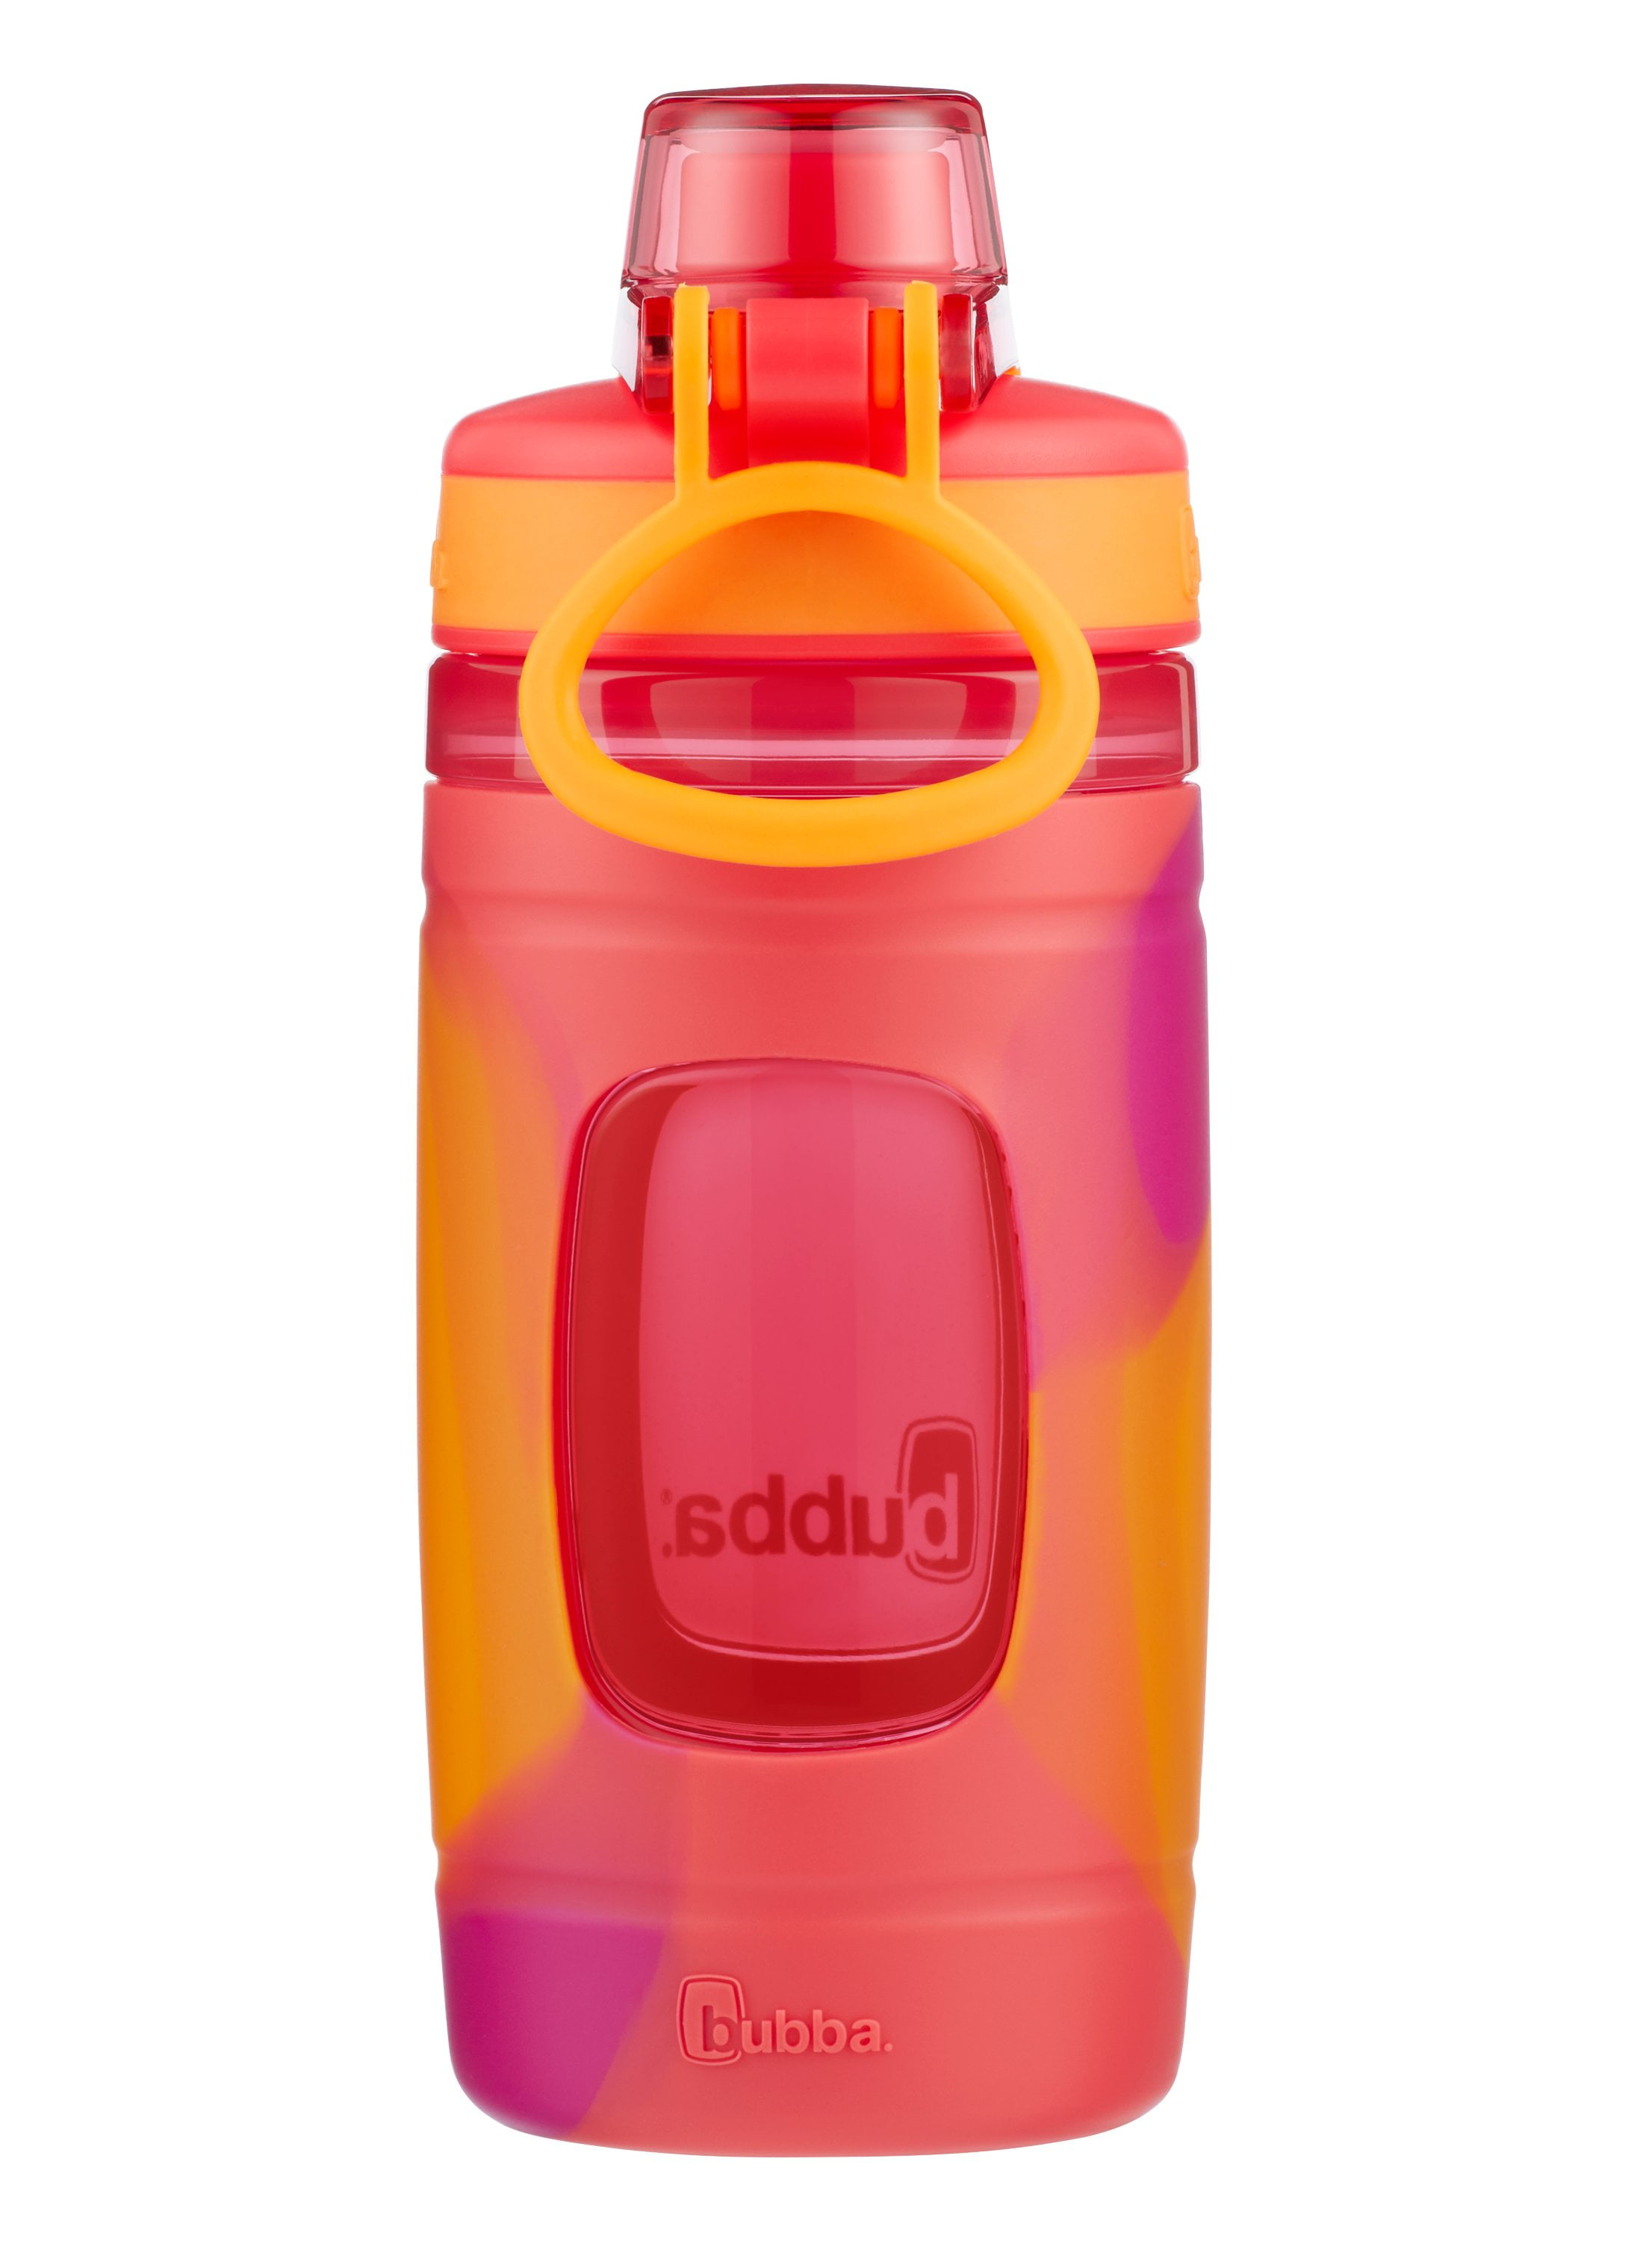 Bubba Kids 16 oz leak proof water bottle. Bright Berry/Mango color